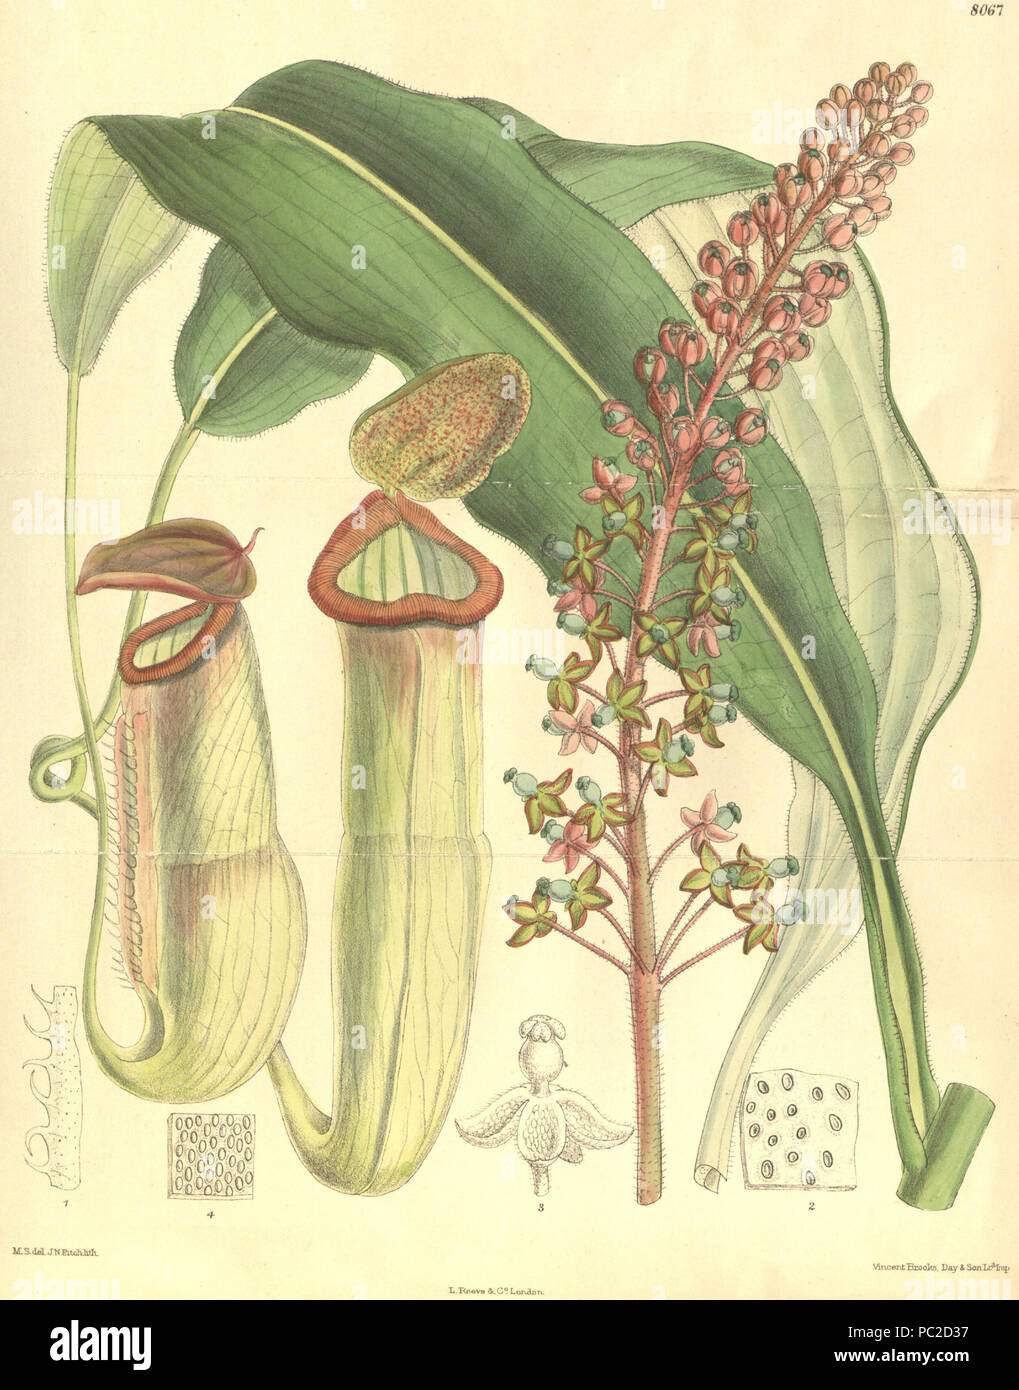 440 Nepenthes phyllamphora - Curtis’s Botanical Magazine (1906) Stock Photo